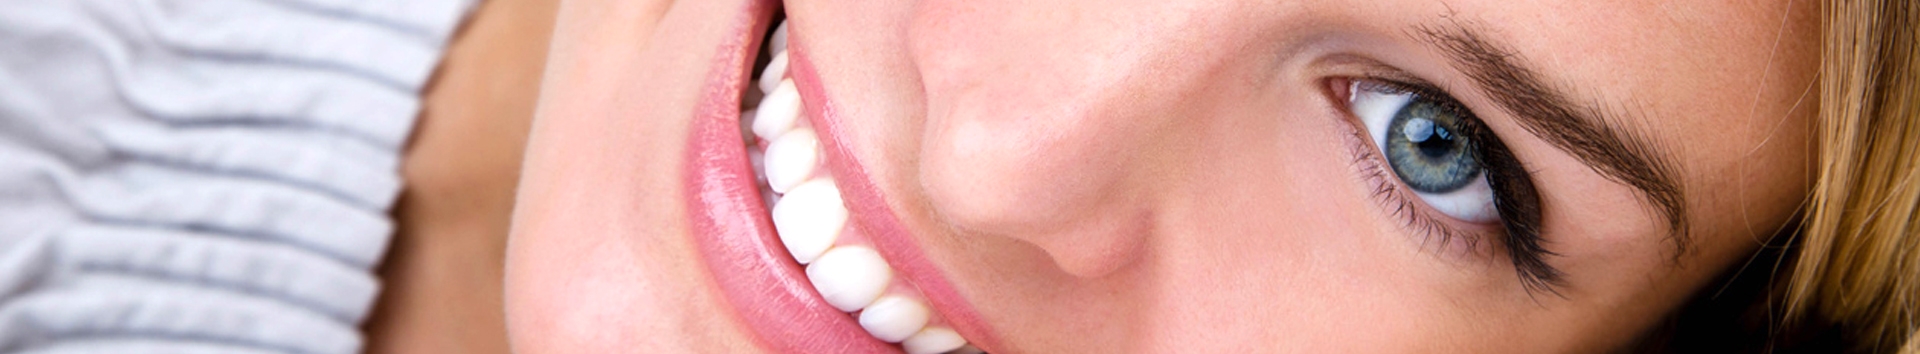 Lentes de Contato Dental: Cuidados vitais para manter o sorriso